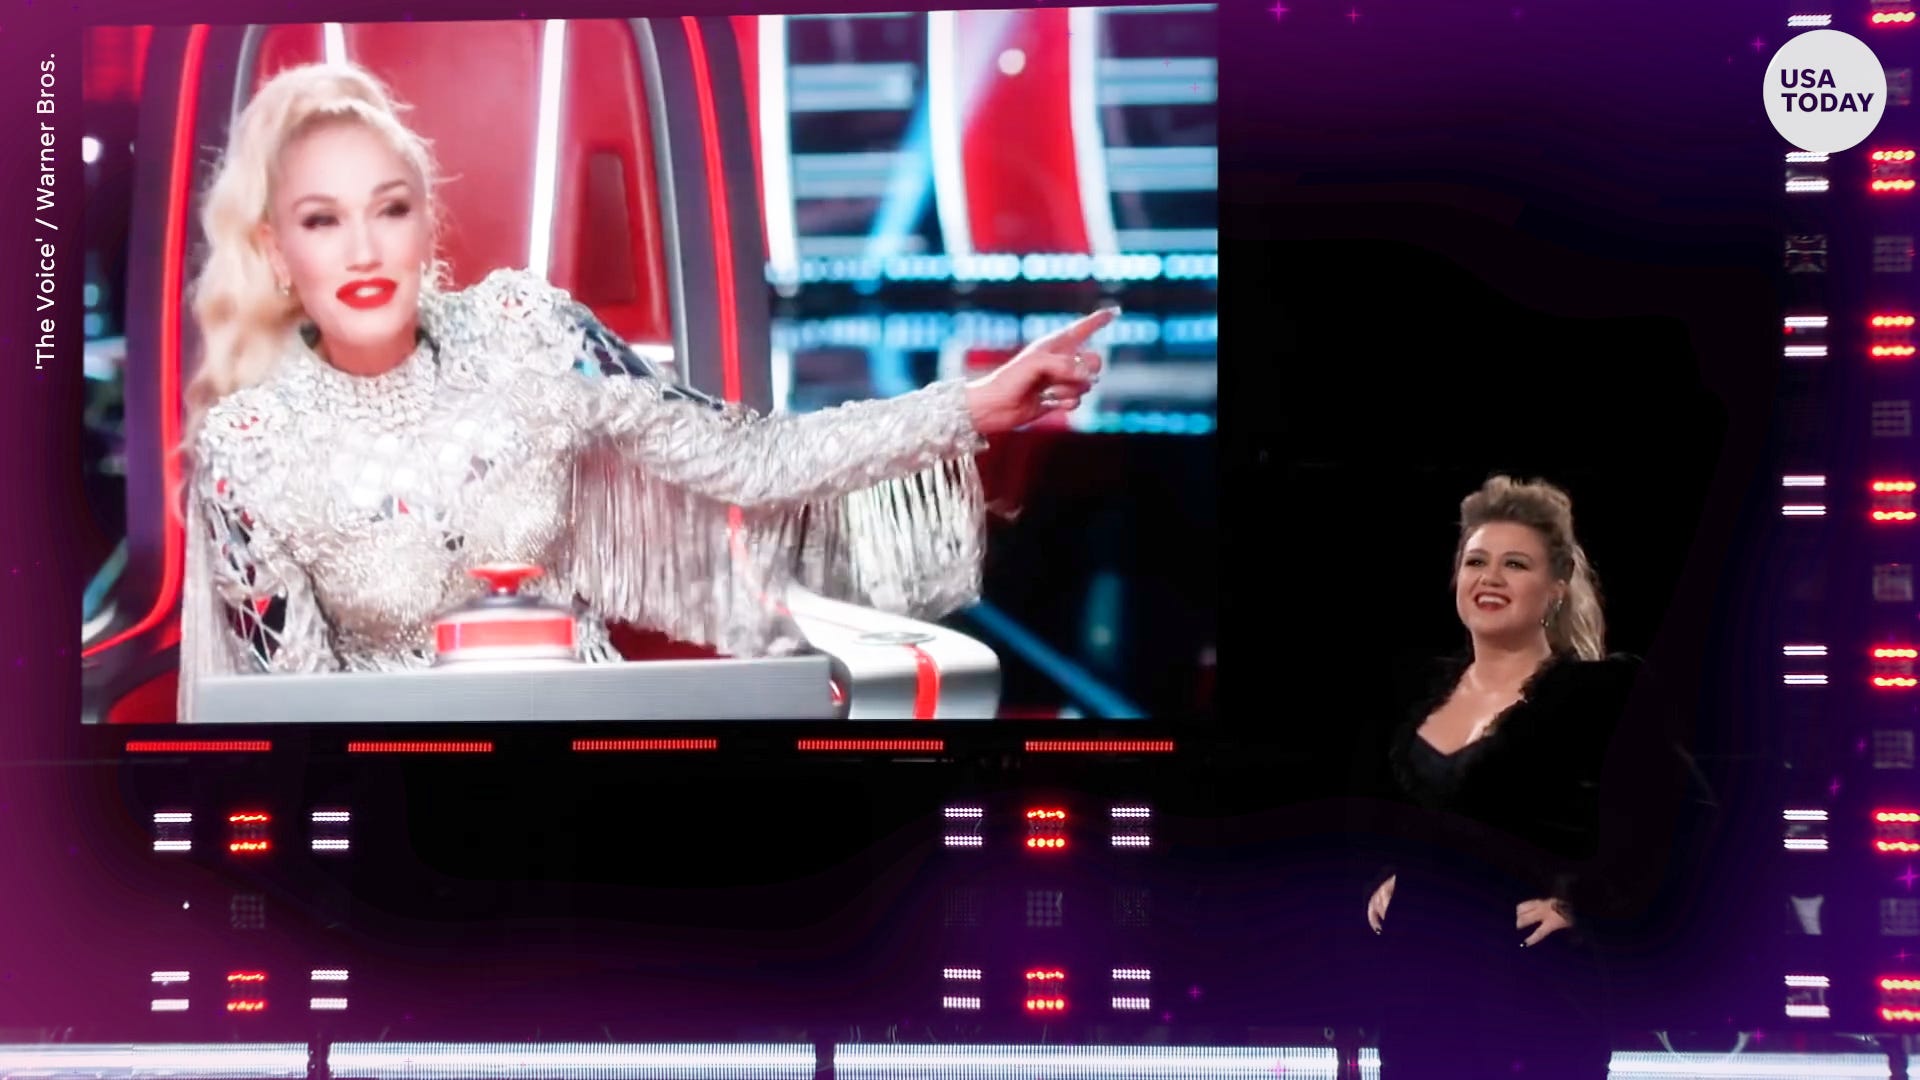 Kelly Clarkson uses a secret weapon, Gwen Stefani, against Blake Shelton on 'The Voice'